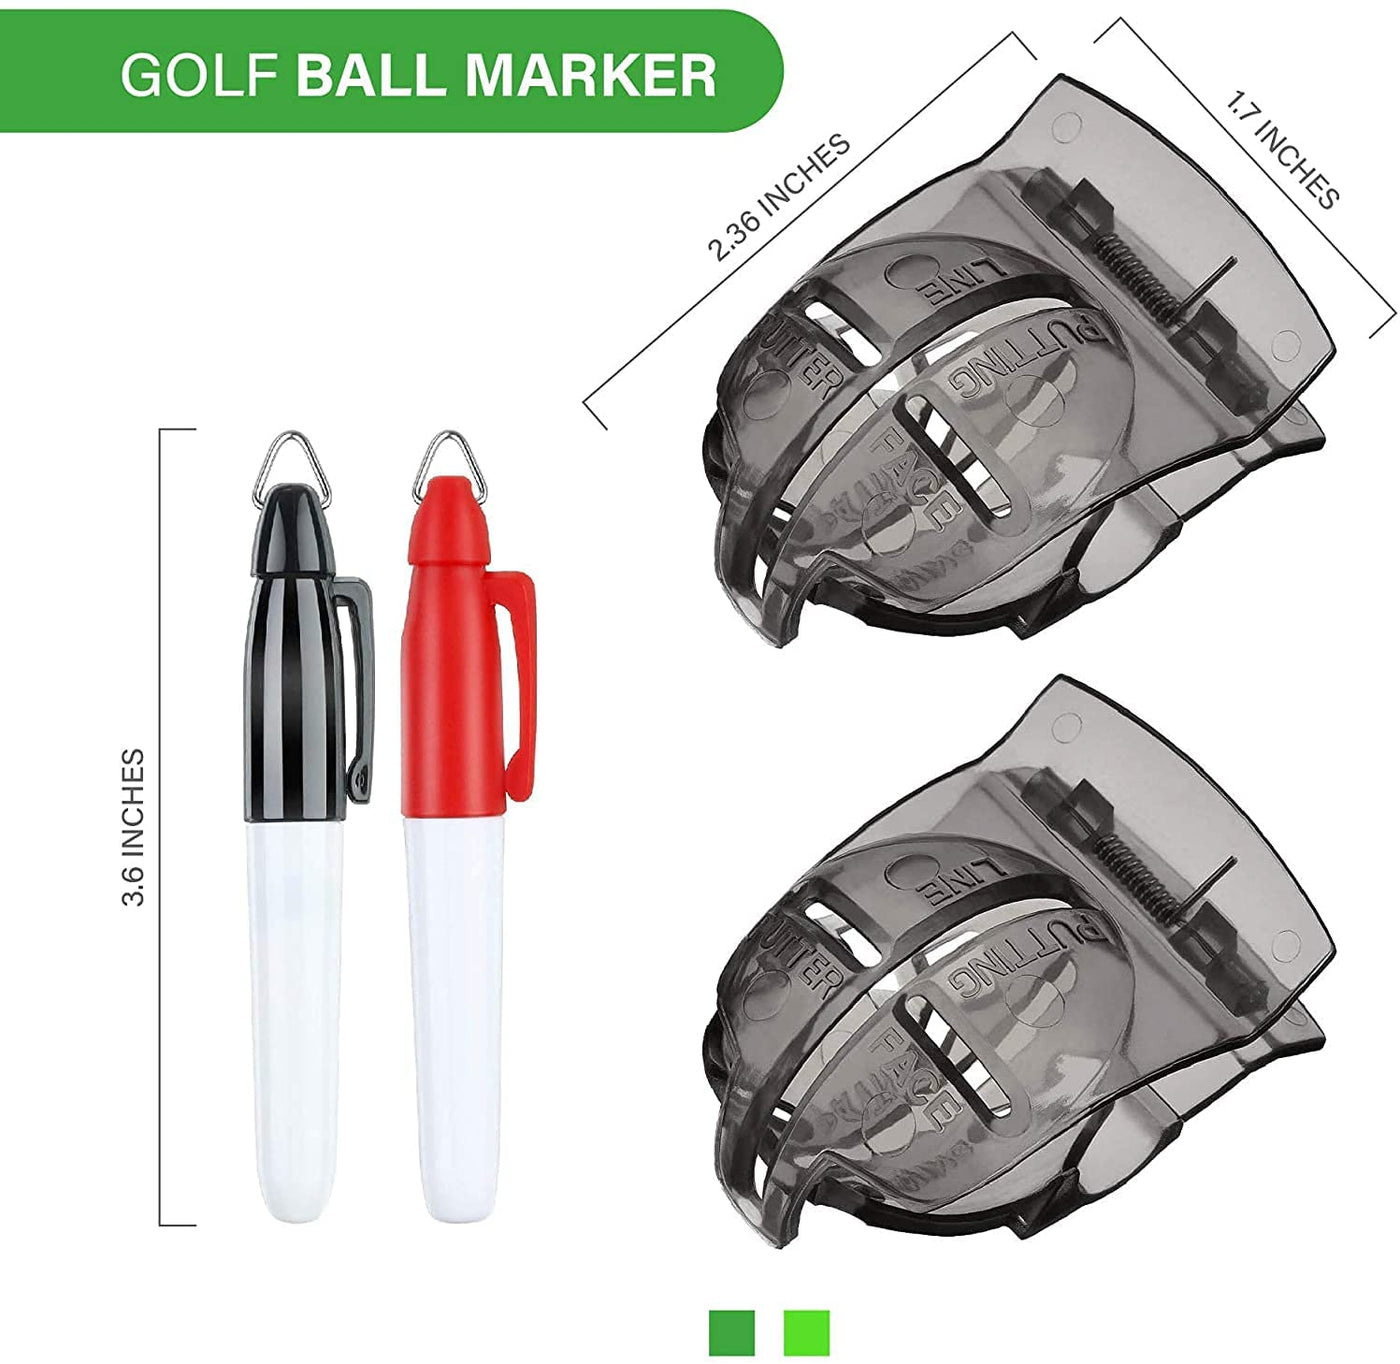 Golf Towel and Tool Accessories Bag KIT Christmas Gift